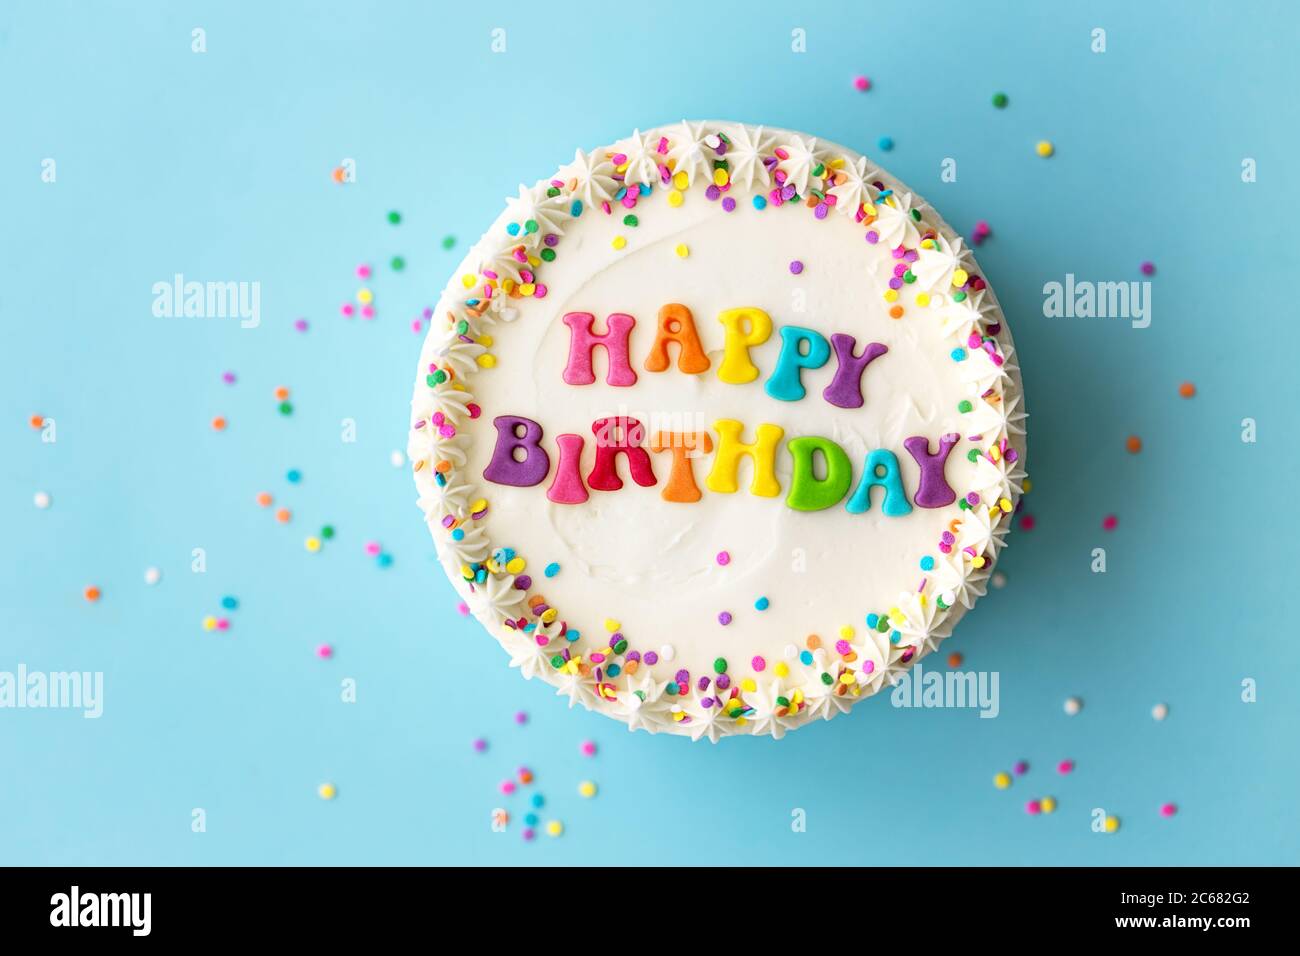 Happy birthday cake with rainbow lettering Stock Photo